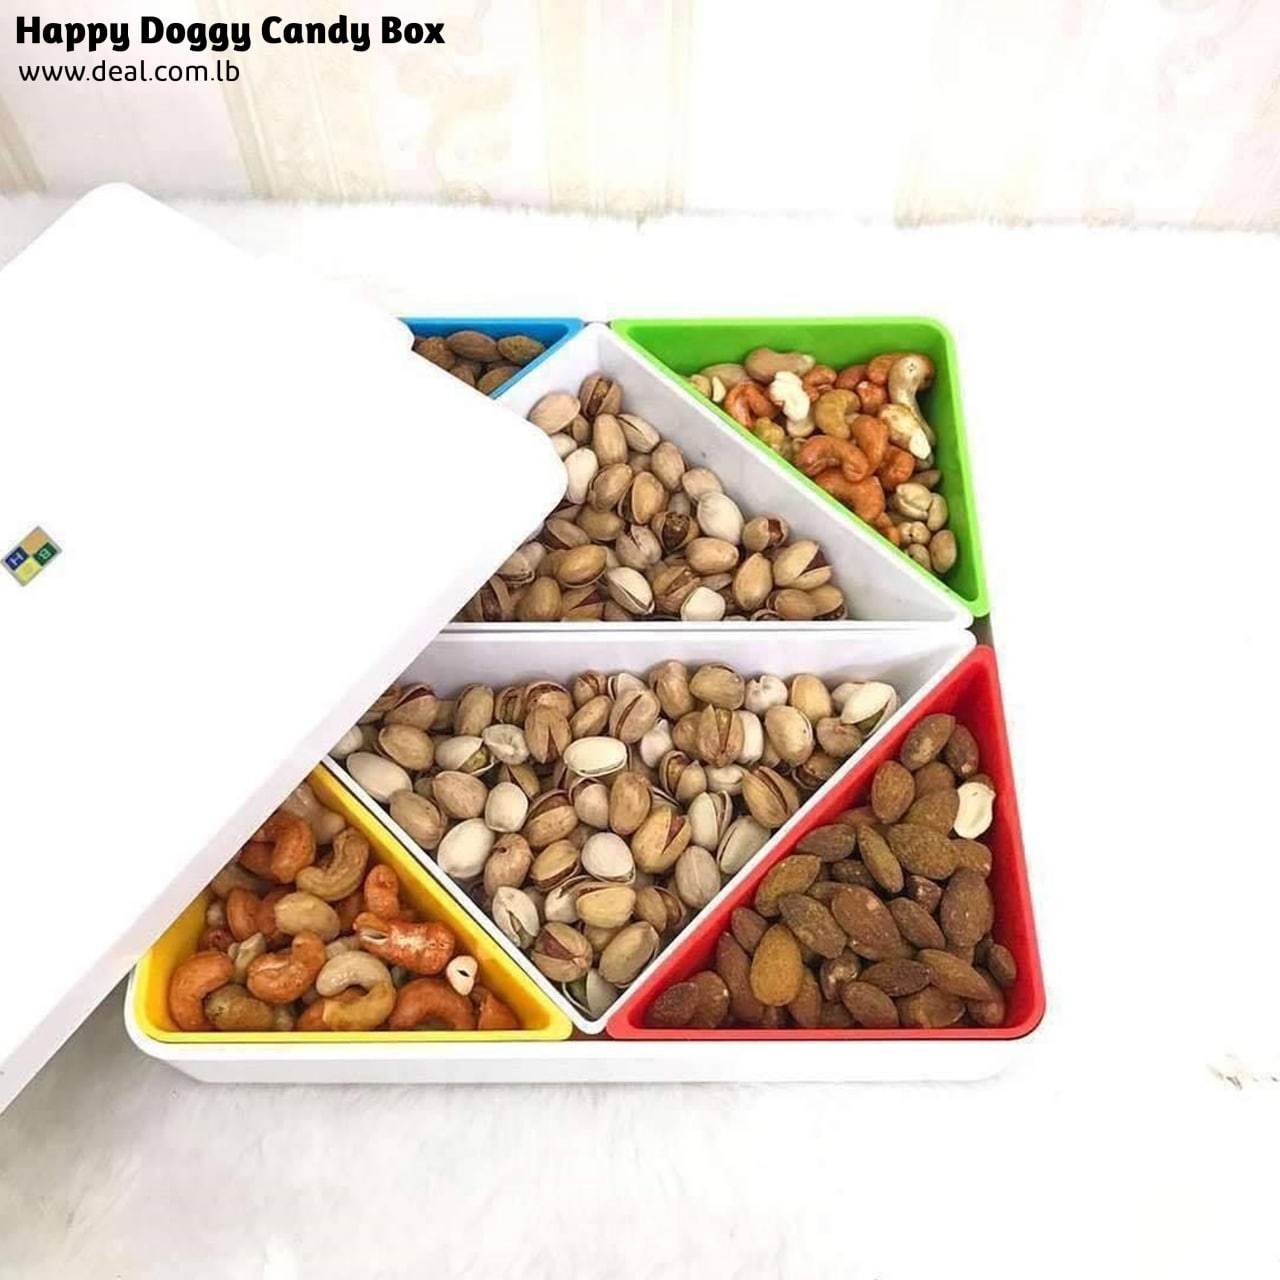 Happy Doggy Candy Box